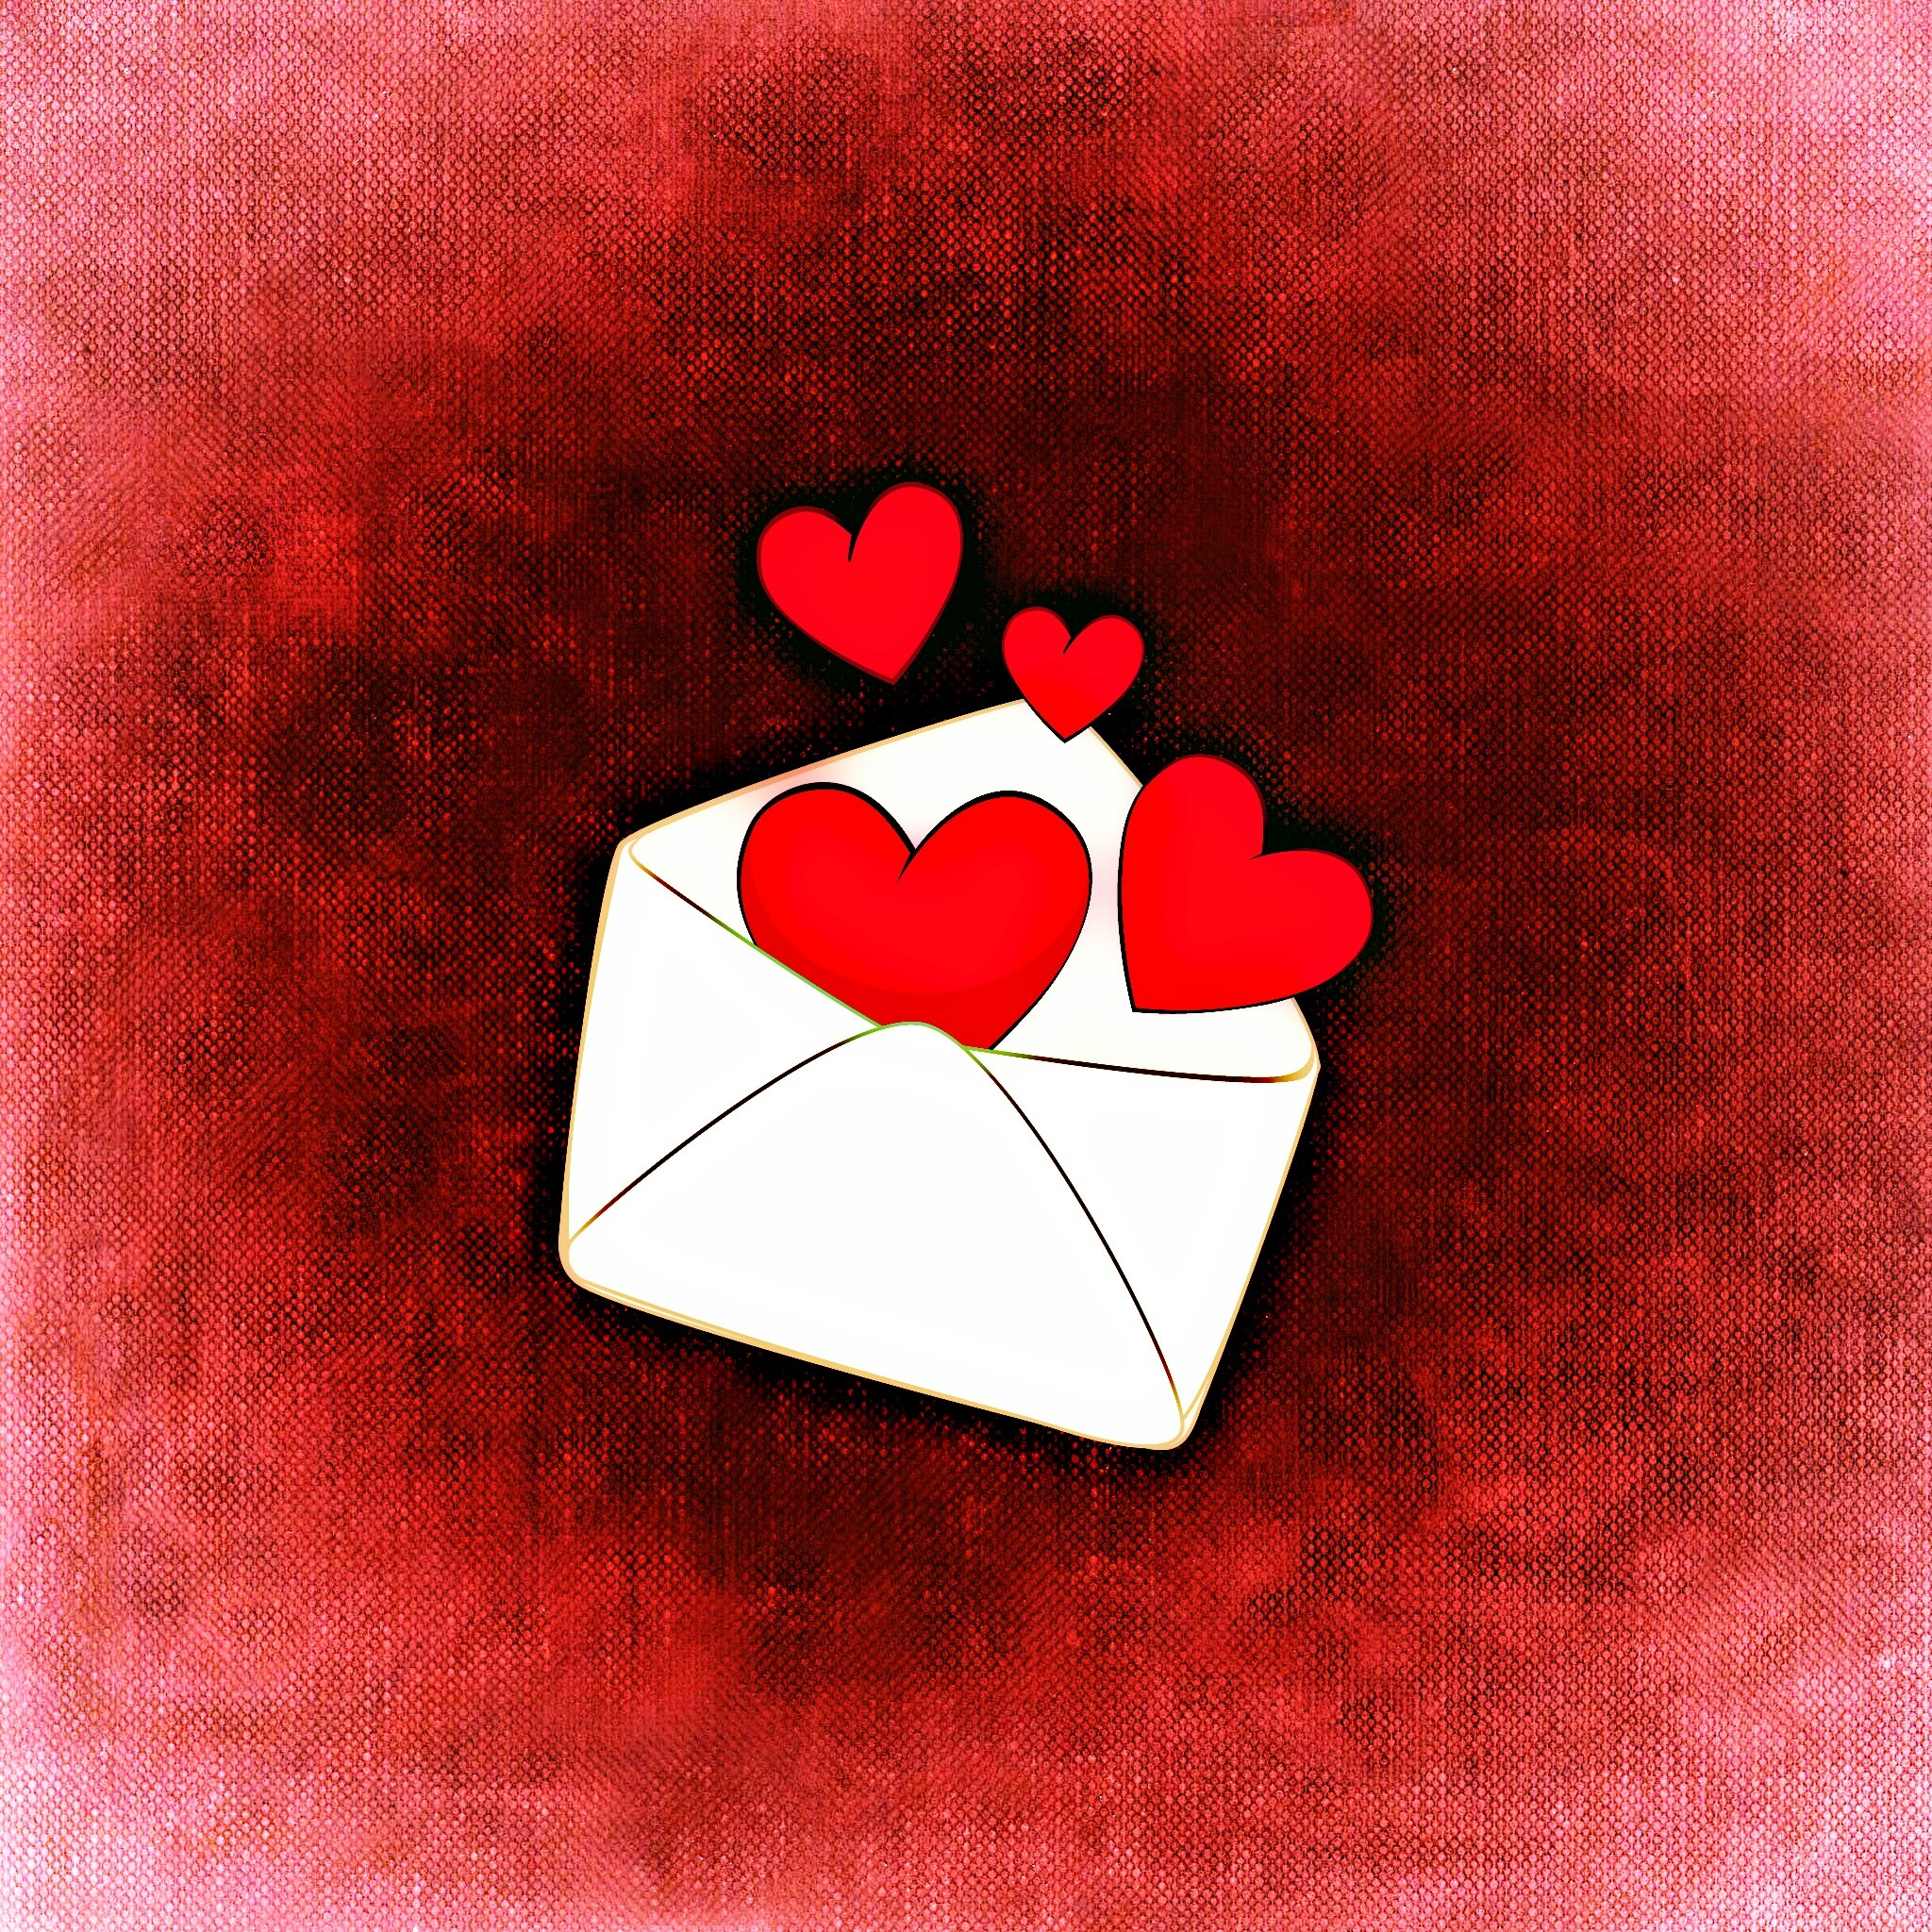 art, love, hearts, romance, envelope